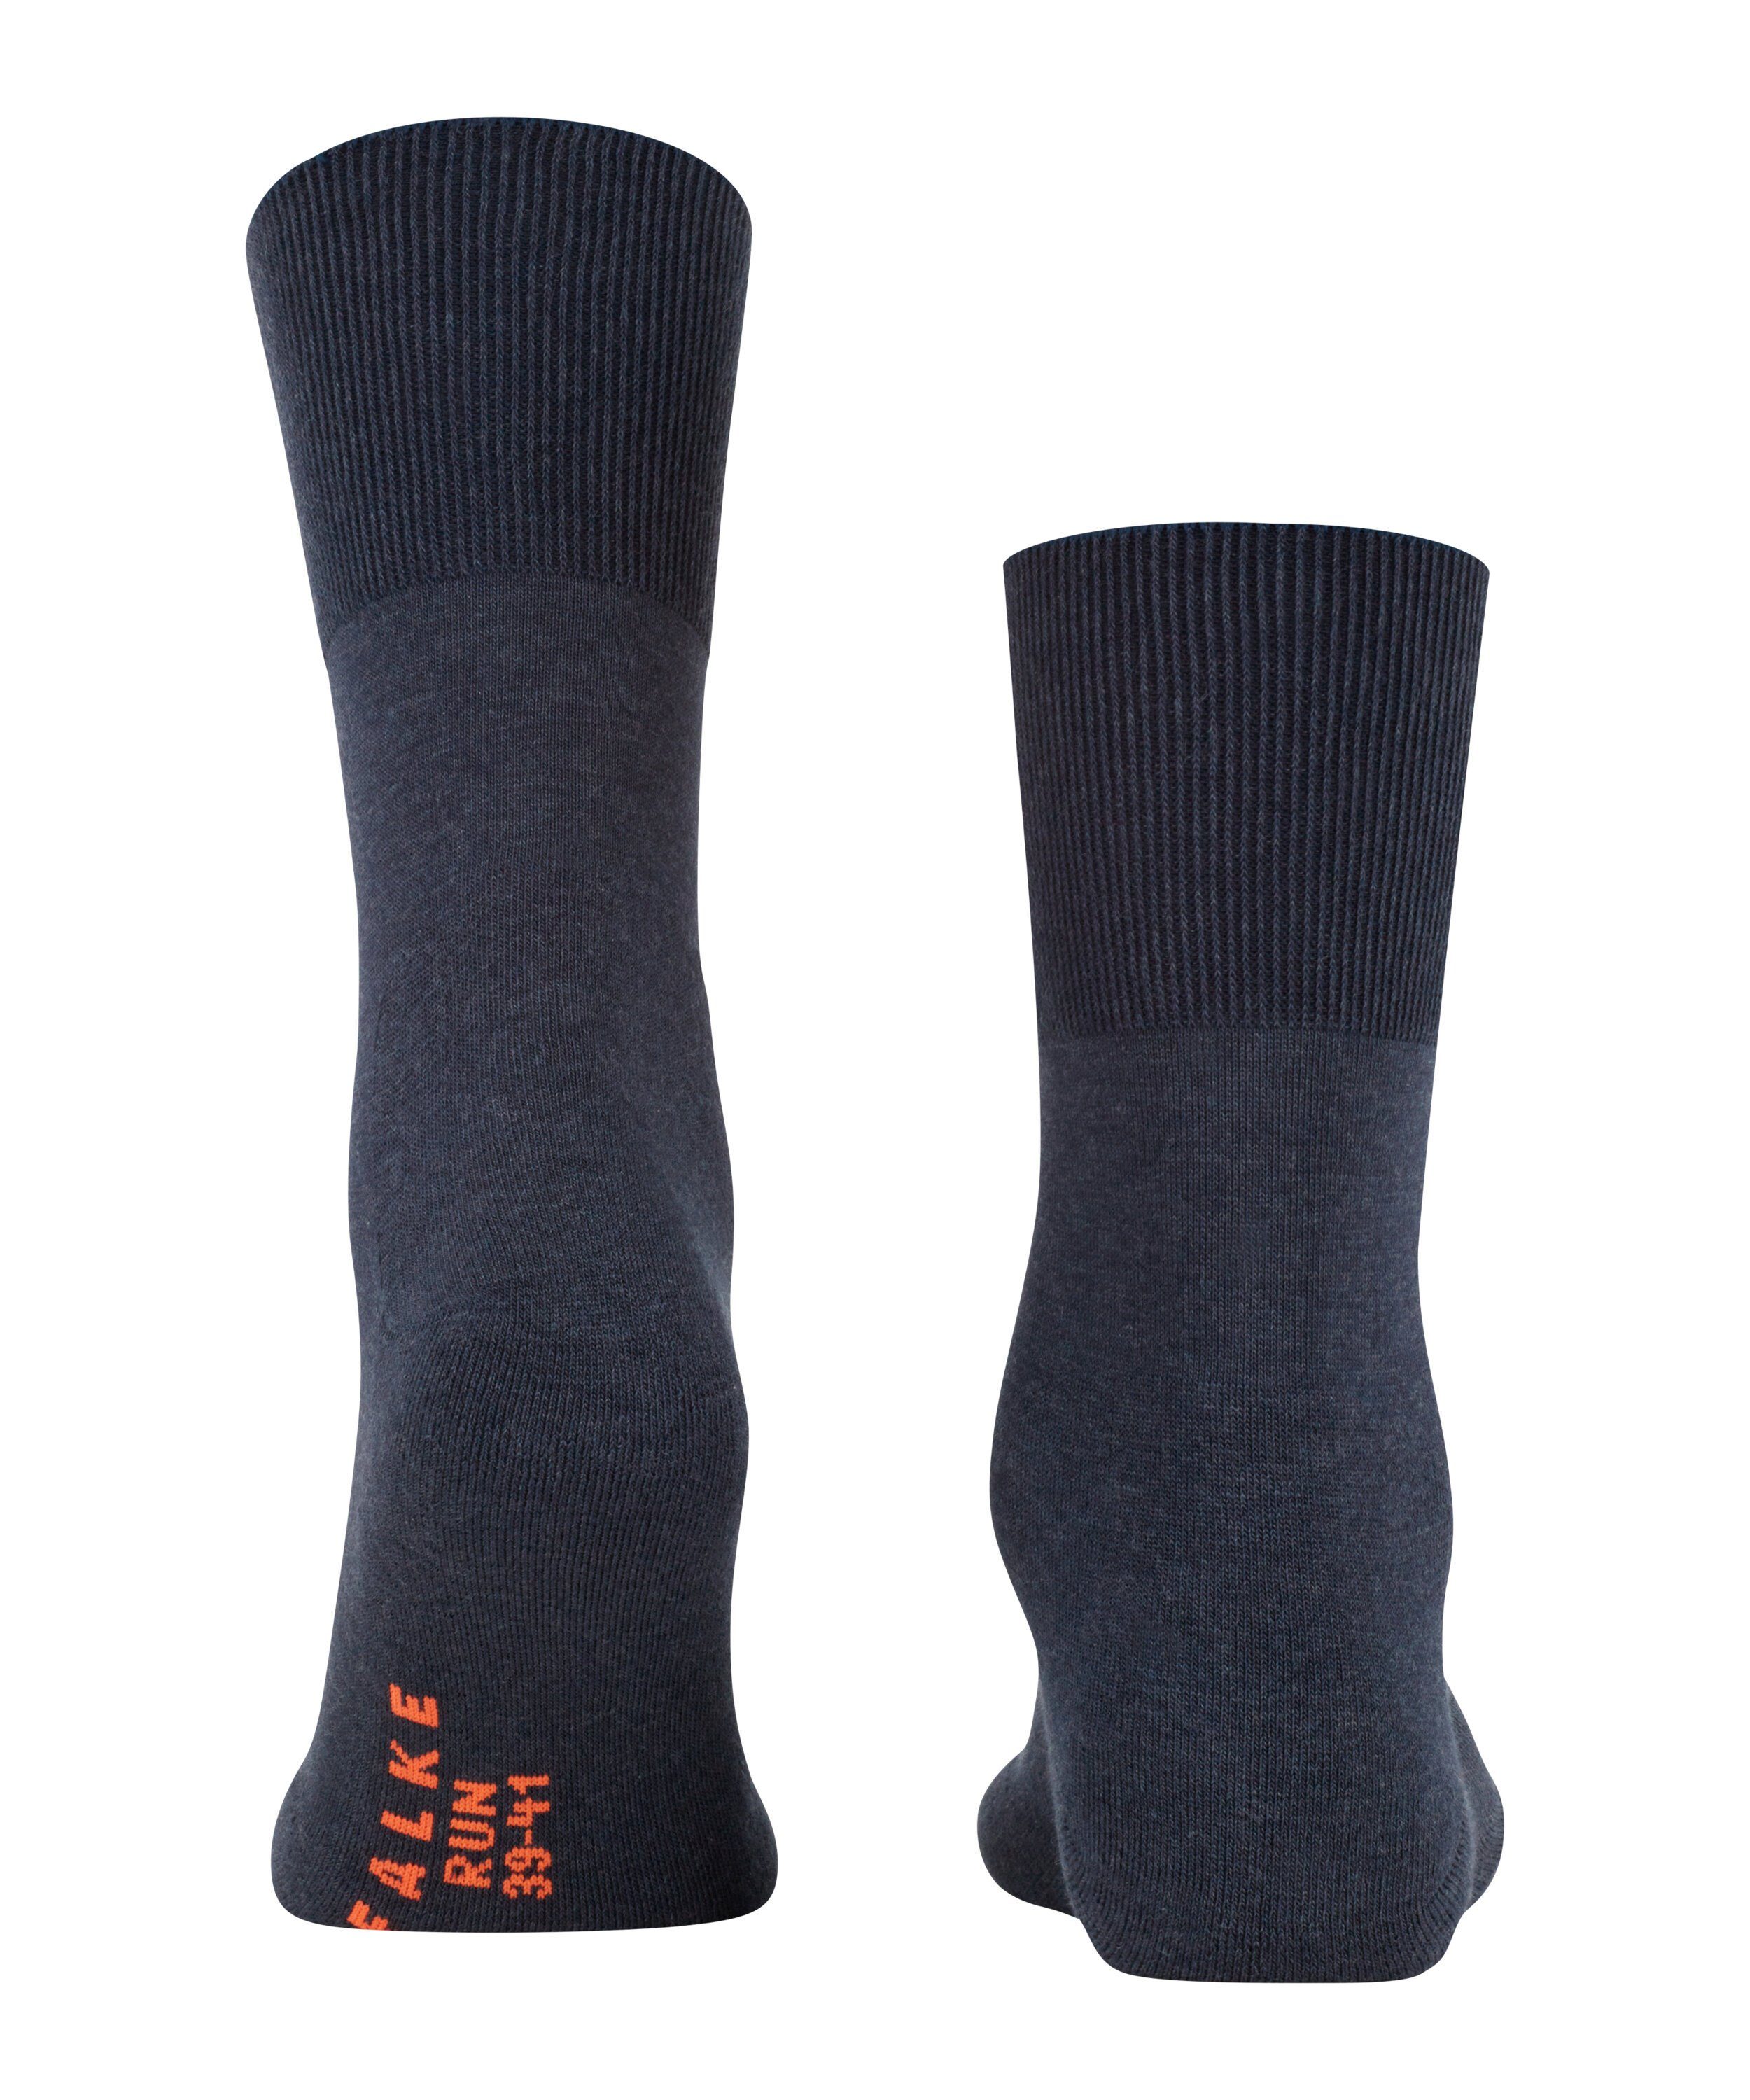 Socken (1-Paar) FALKE (6490) m Run navyblue